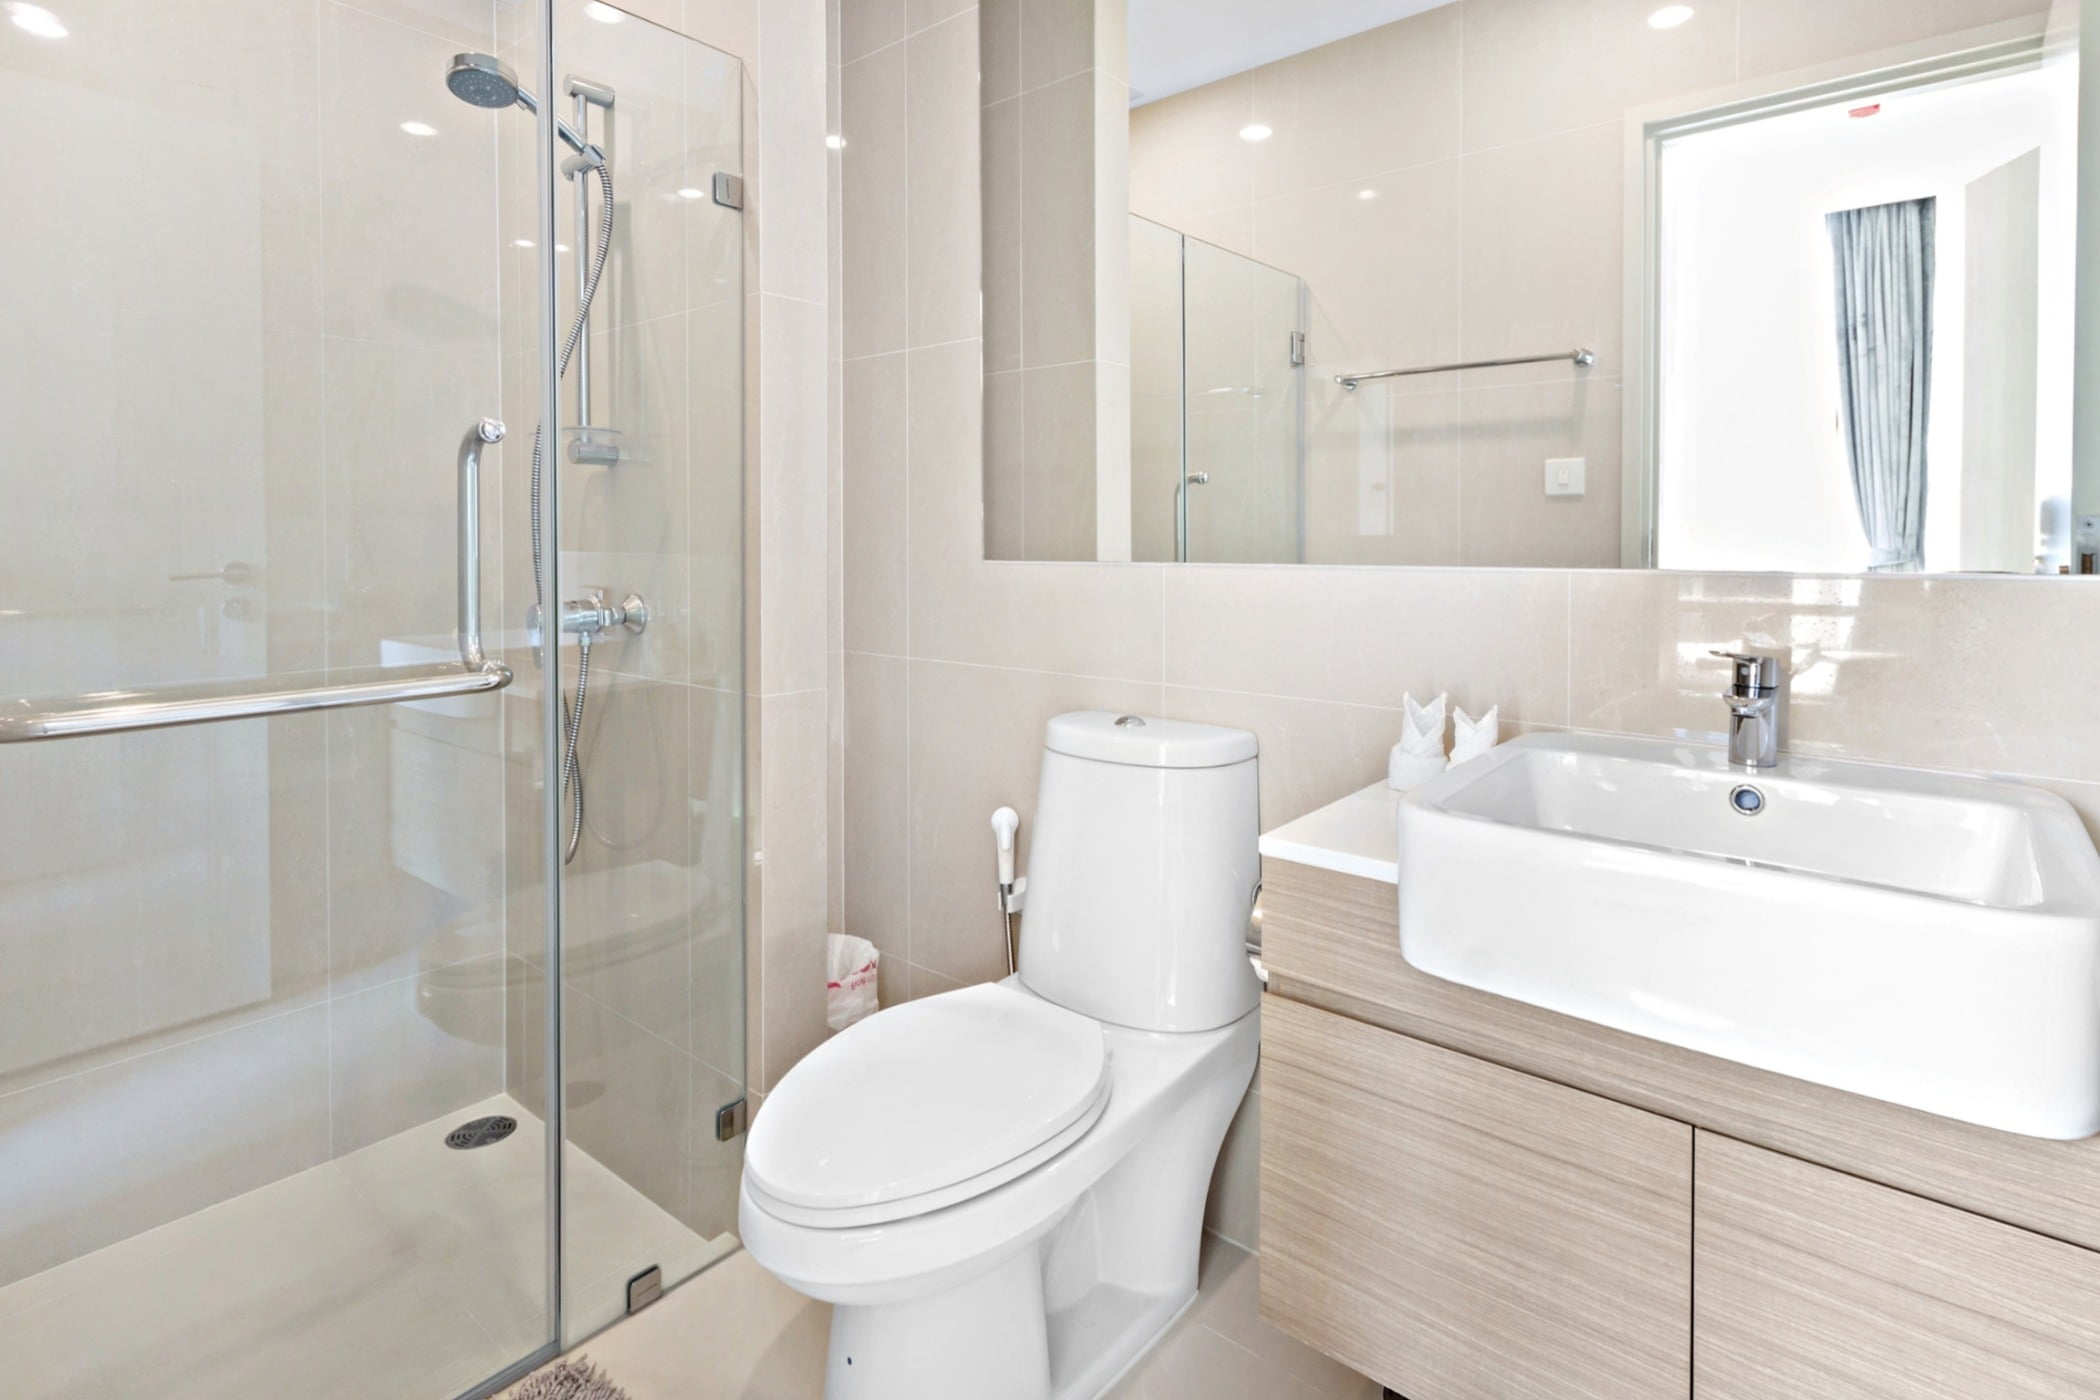 Plumbing fixture, Mirror, Building, Property, Sink, Photograph, White, Tap, Bathroom, Black